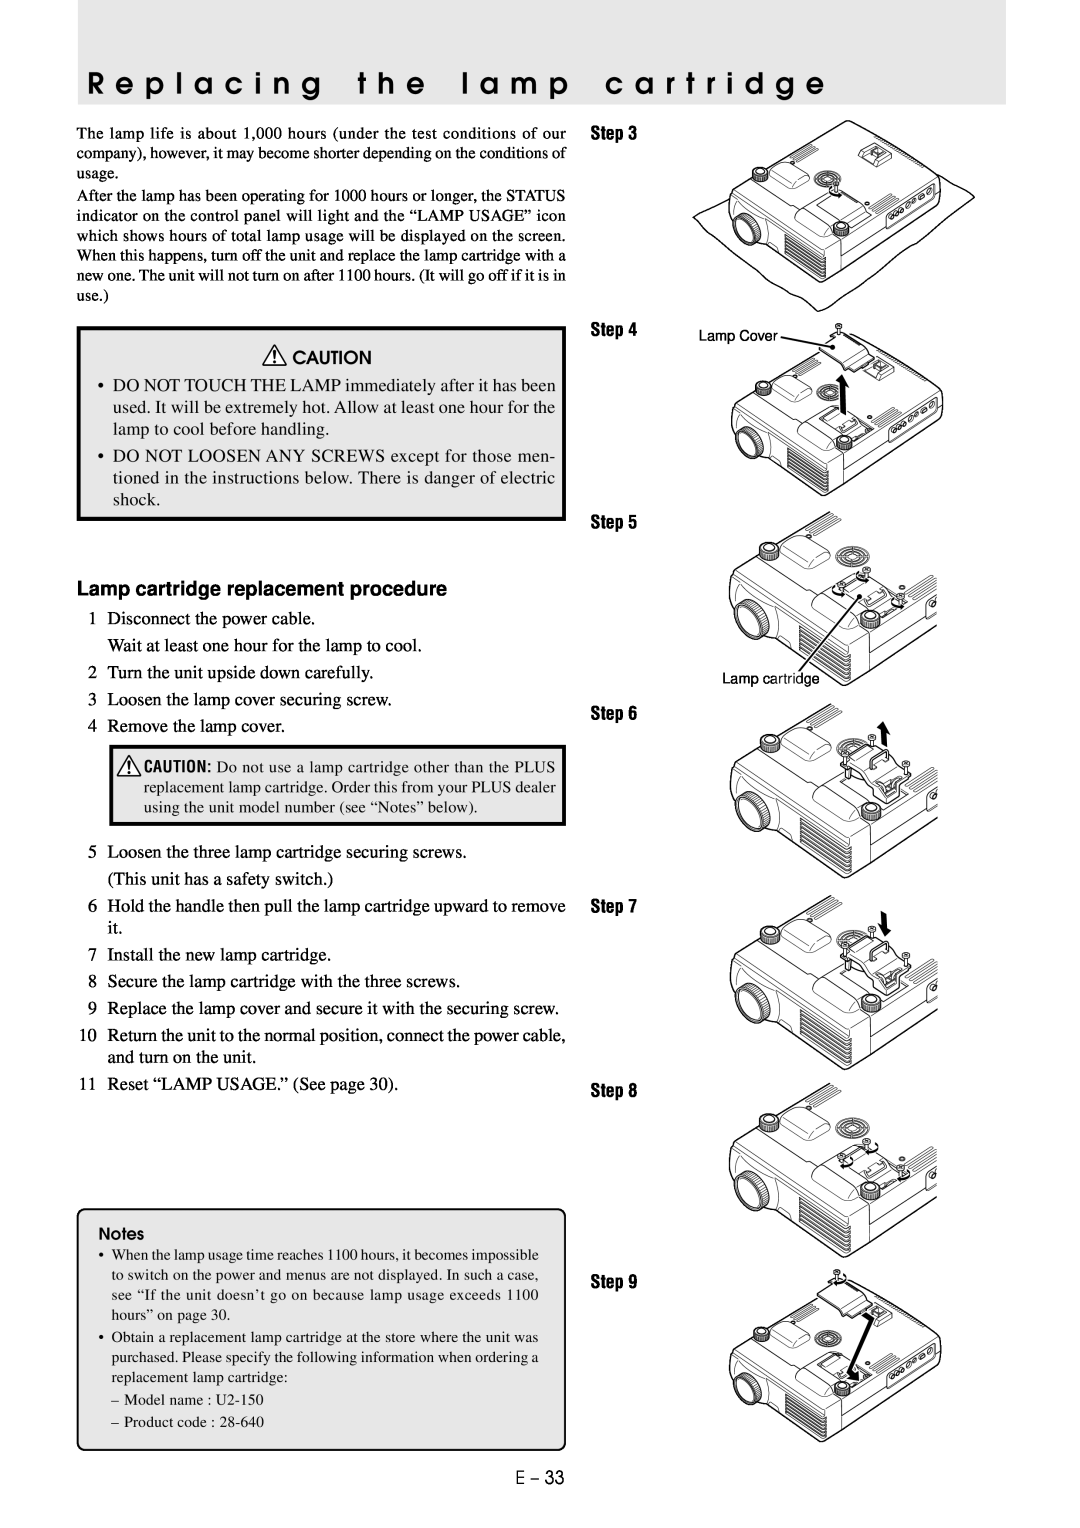 PLUS Vision U2-1130/U2-1110 R e p l a c i n g t h e l a m p c a r t r i d g e, Lamp cartridge replacement procedure, Step 